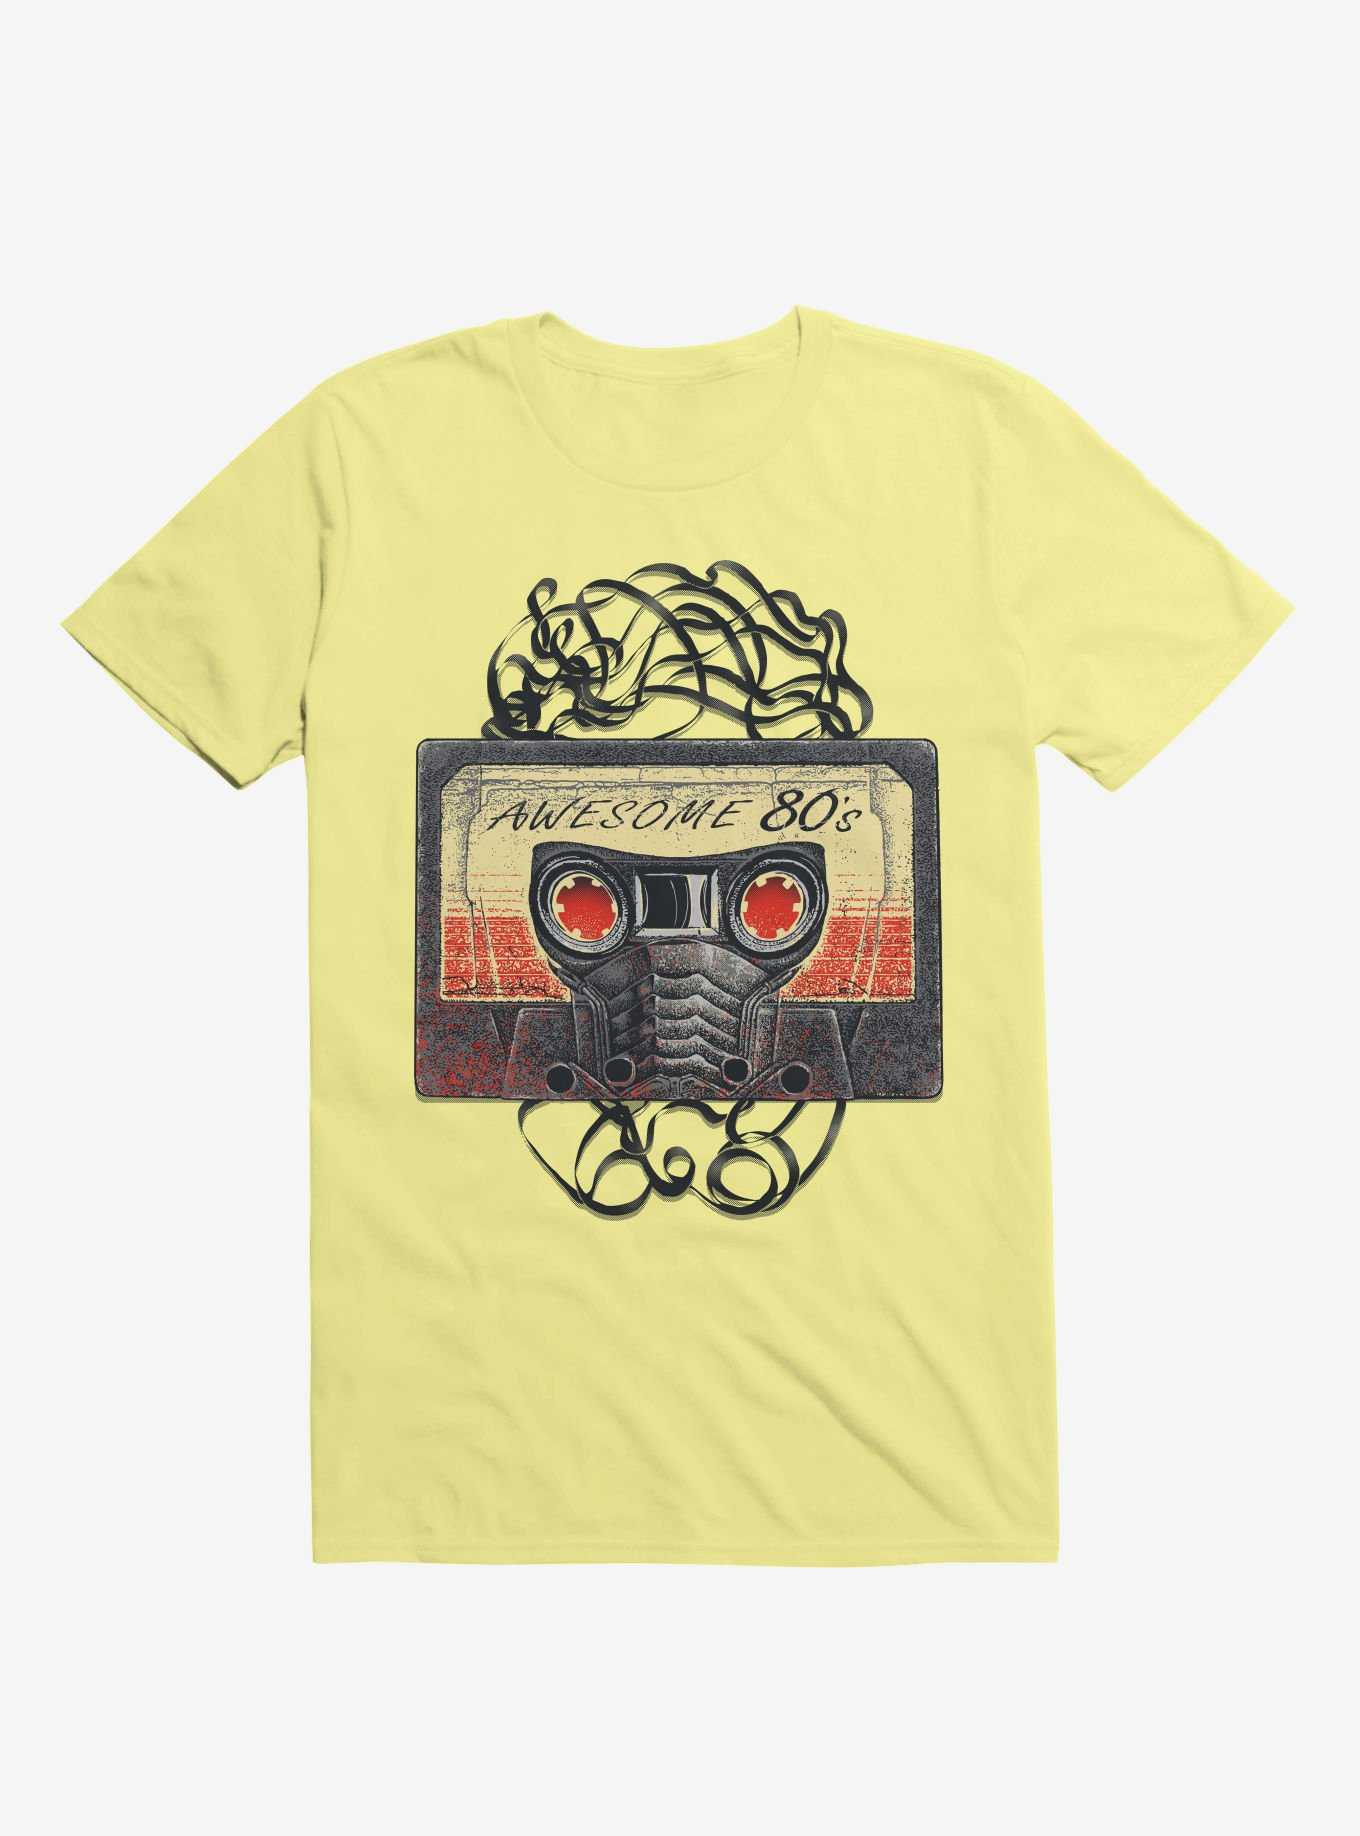 Awesome 80's Mixtape Corn Silk Yellow T-Shirt, , hi-res